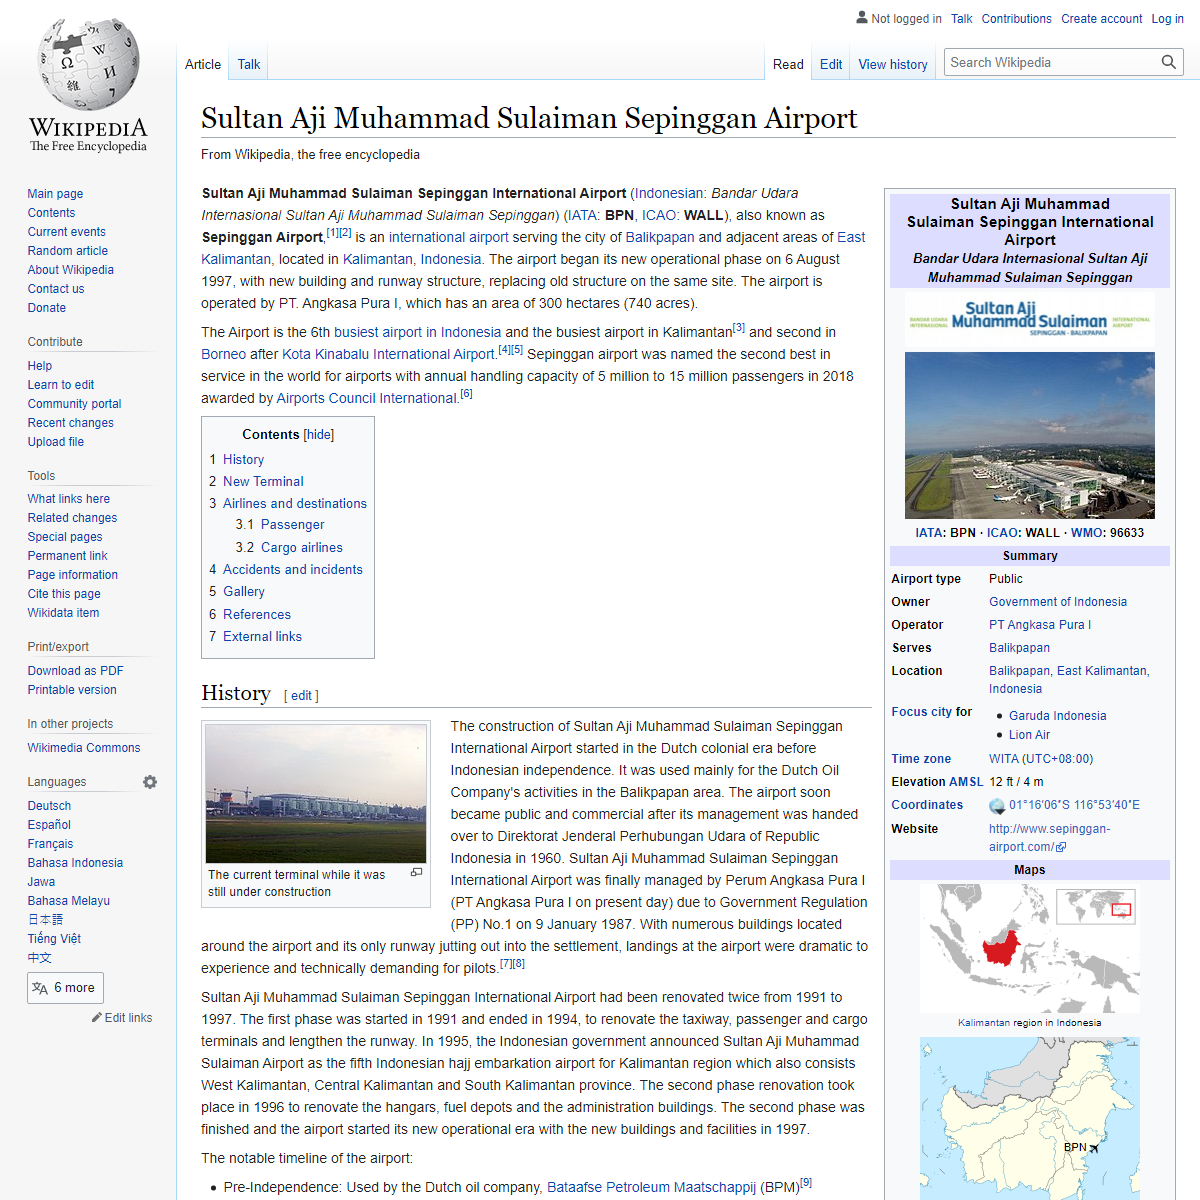 A complete backup of https://en.wikipedia.org/wiki/Sultan_Aji_Muhammad_Sulaiman_Sepinggan_Airport